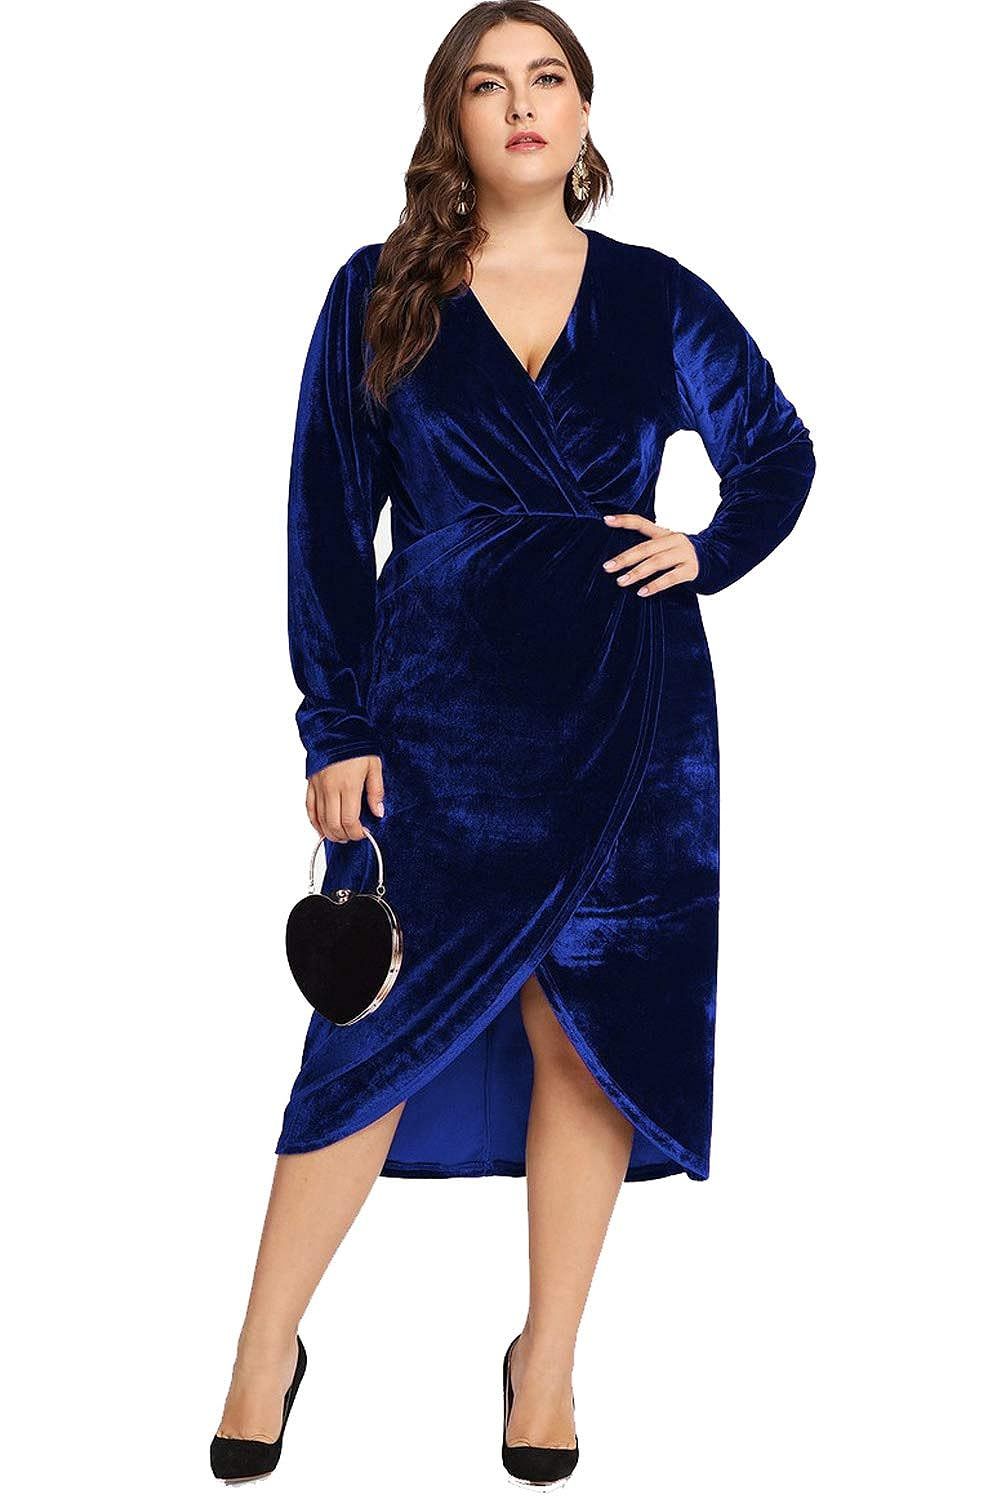 ESPRLIA Women's Plus Size High Waist Velvet Sexy Faux Wrap Pencil Cocktail Midi Dresses | Amazon (US)